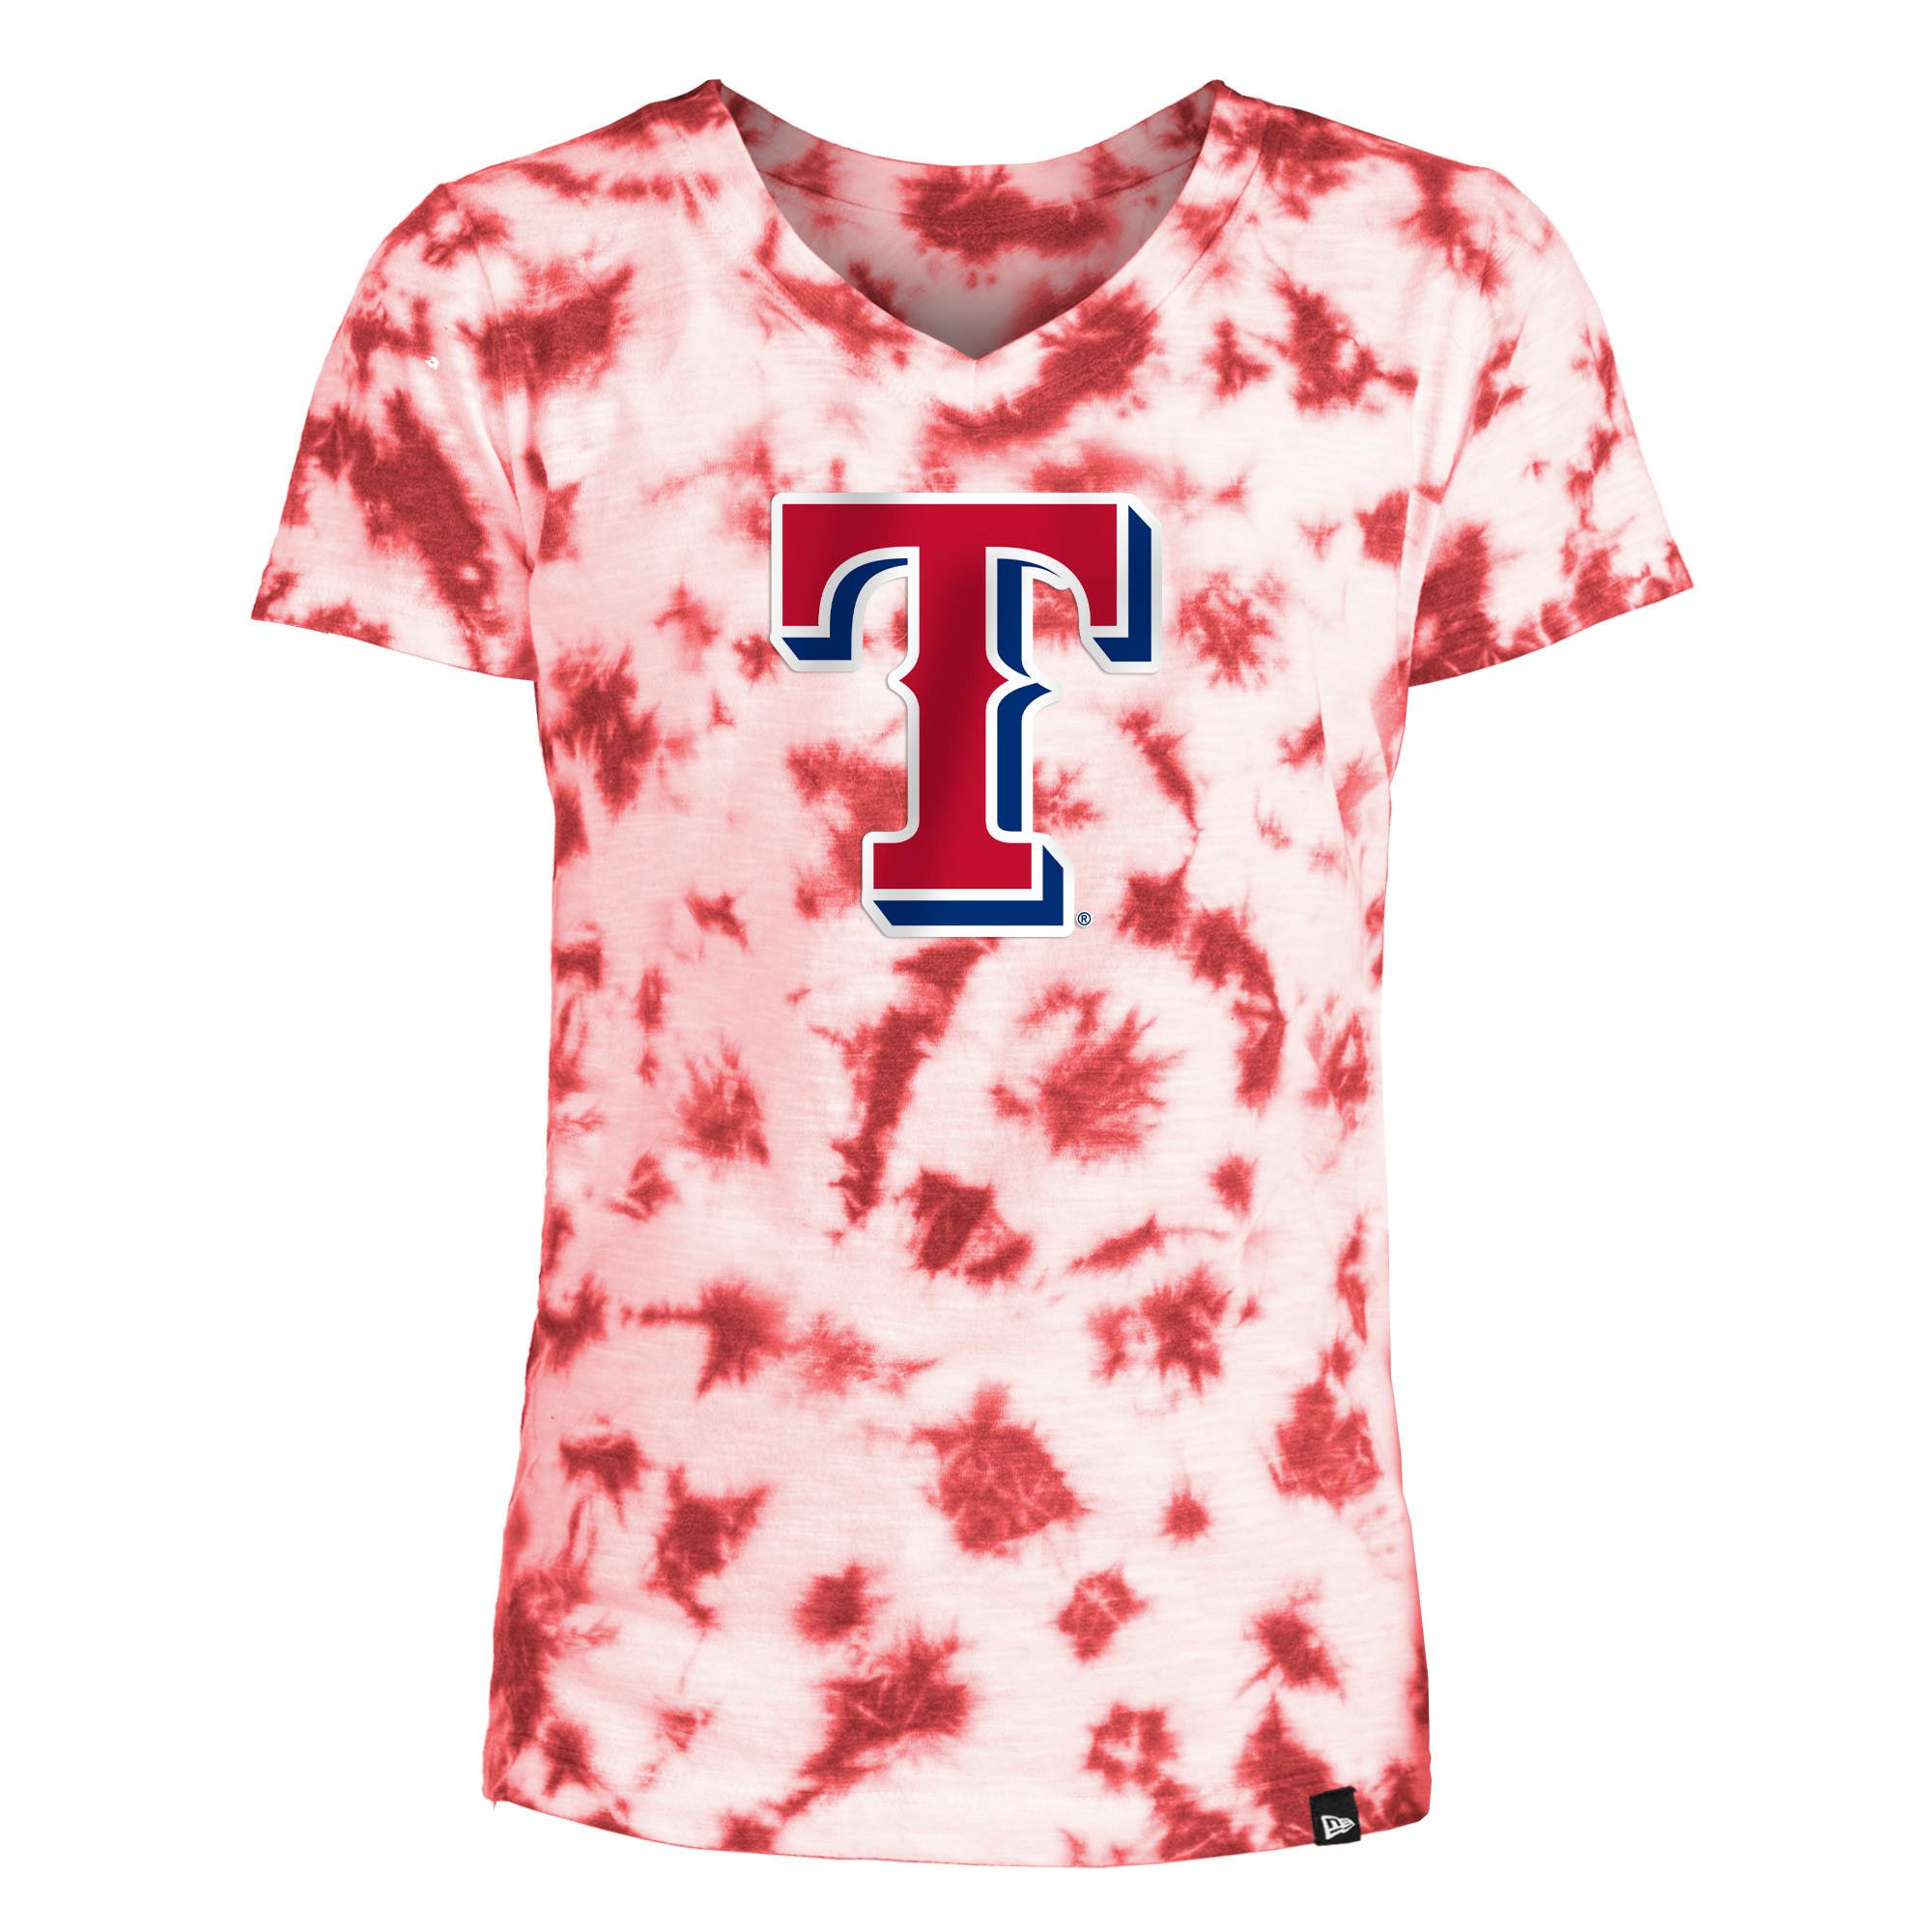 Youth Girls' Texas Rangers Red Tie Dye V-Neck T-Shirt